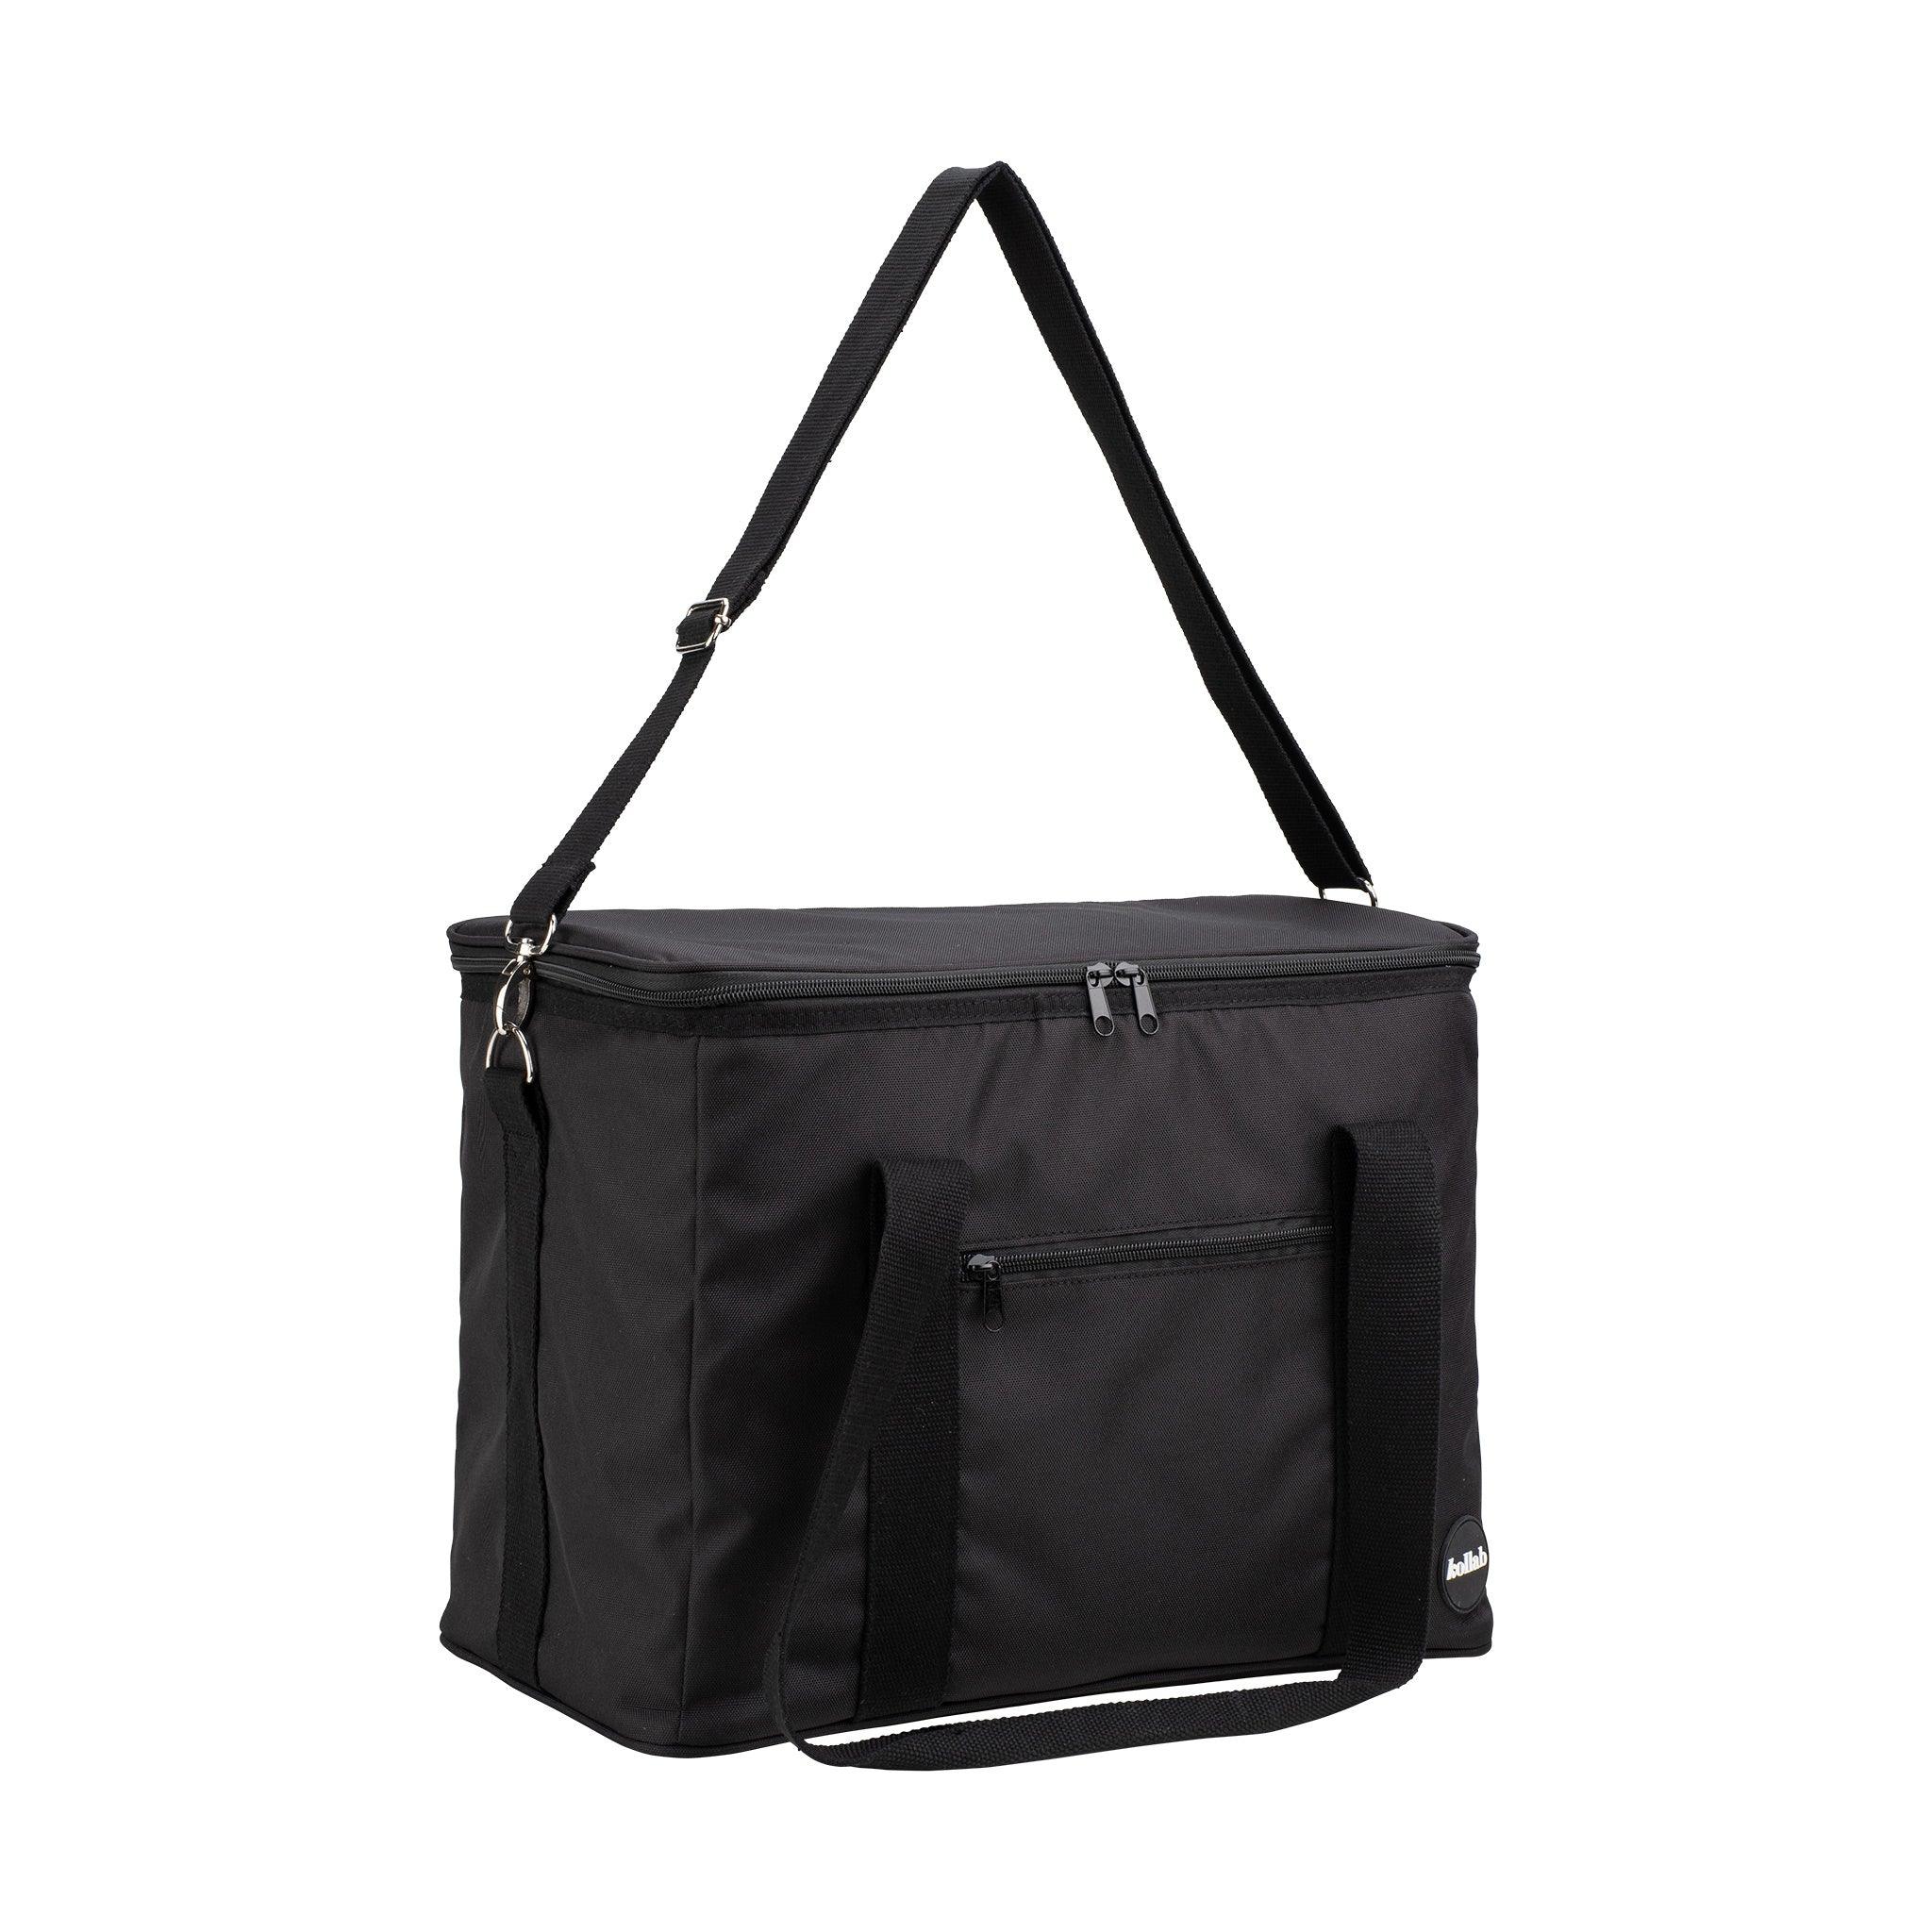 Kollab Holiday Picnic Bag Black Black – Handbags from BJs Furniture Horsham